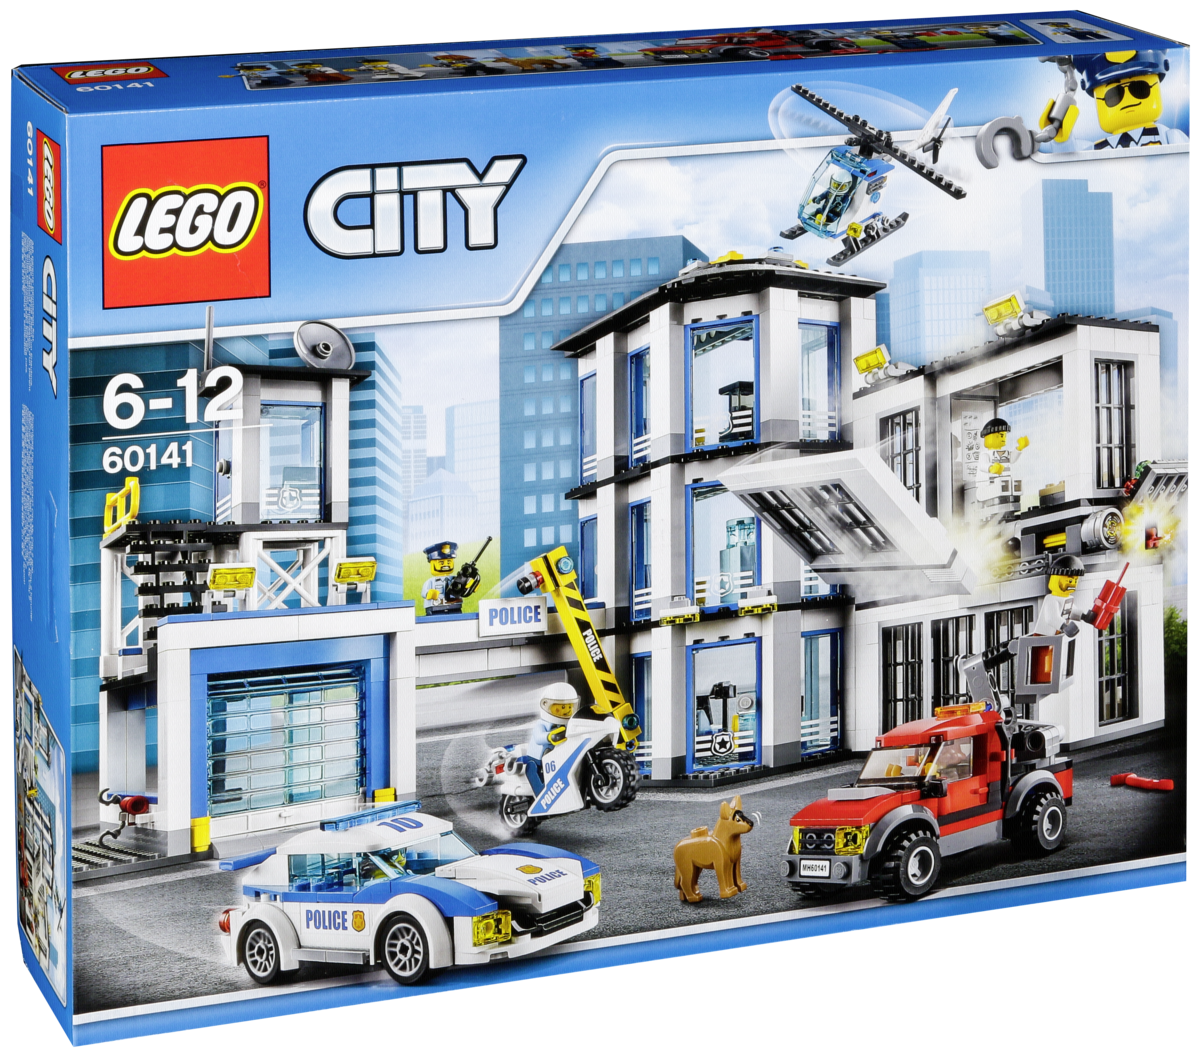 LEGO City 60141 Policejní stanice | AB-COM.cz